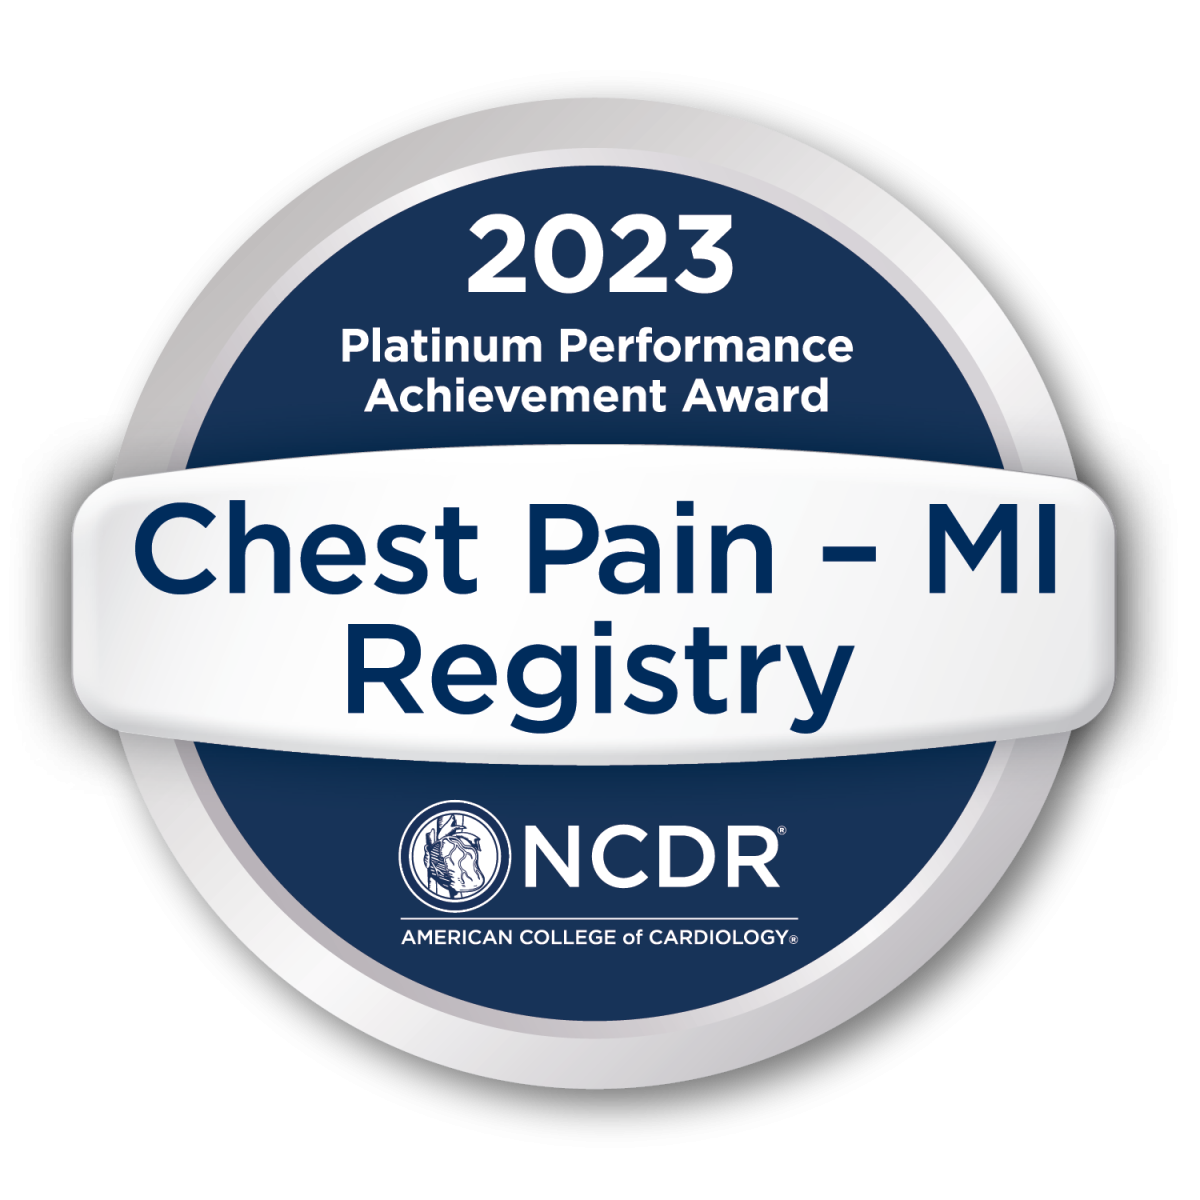 Chest Pain - MI Registry NCDR 2023 Platinum Performance Achievement Award